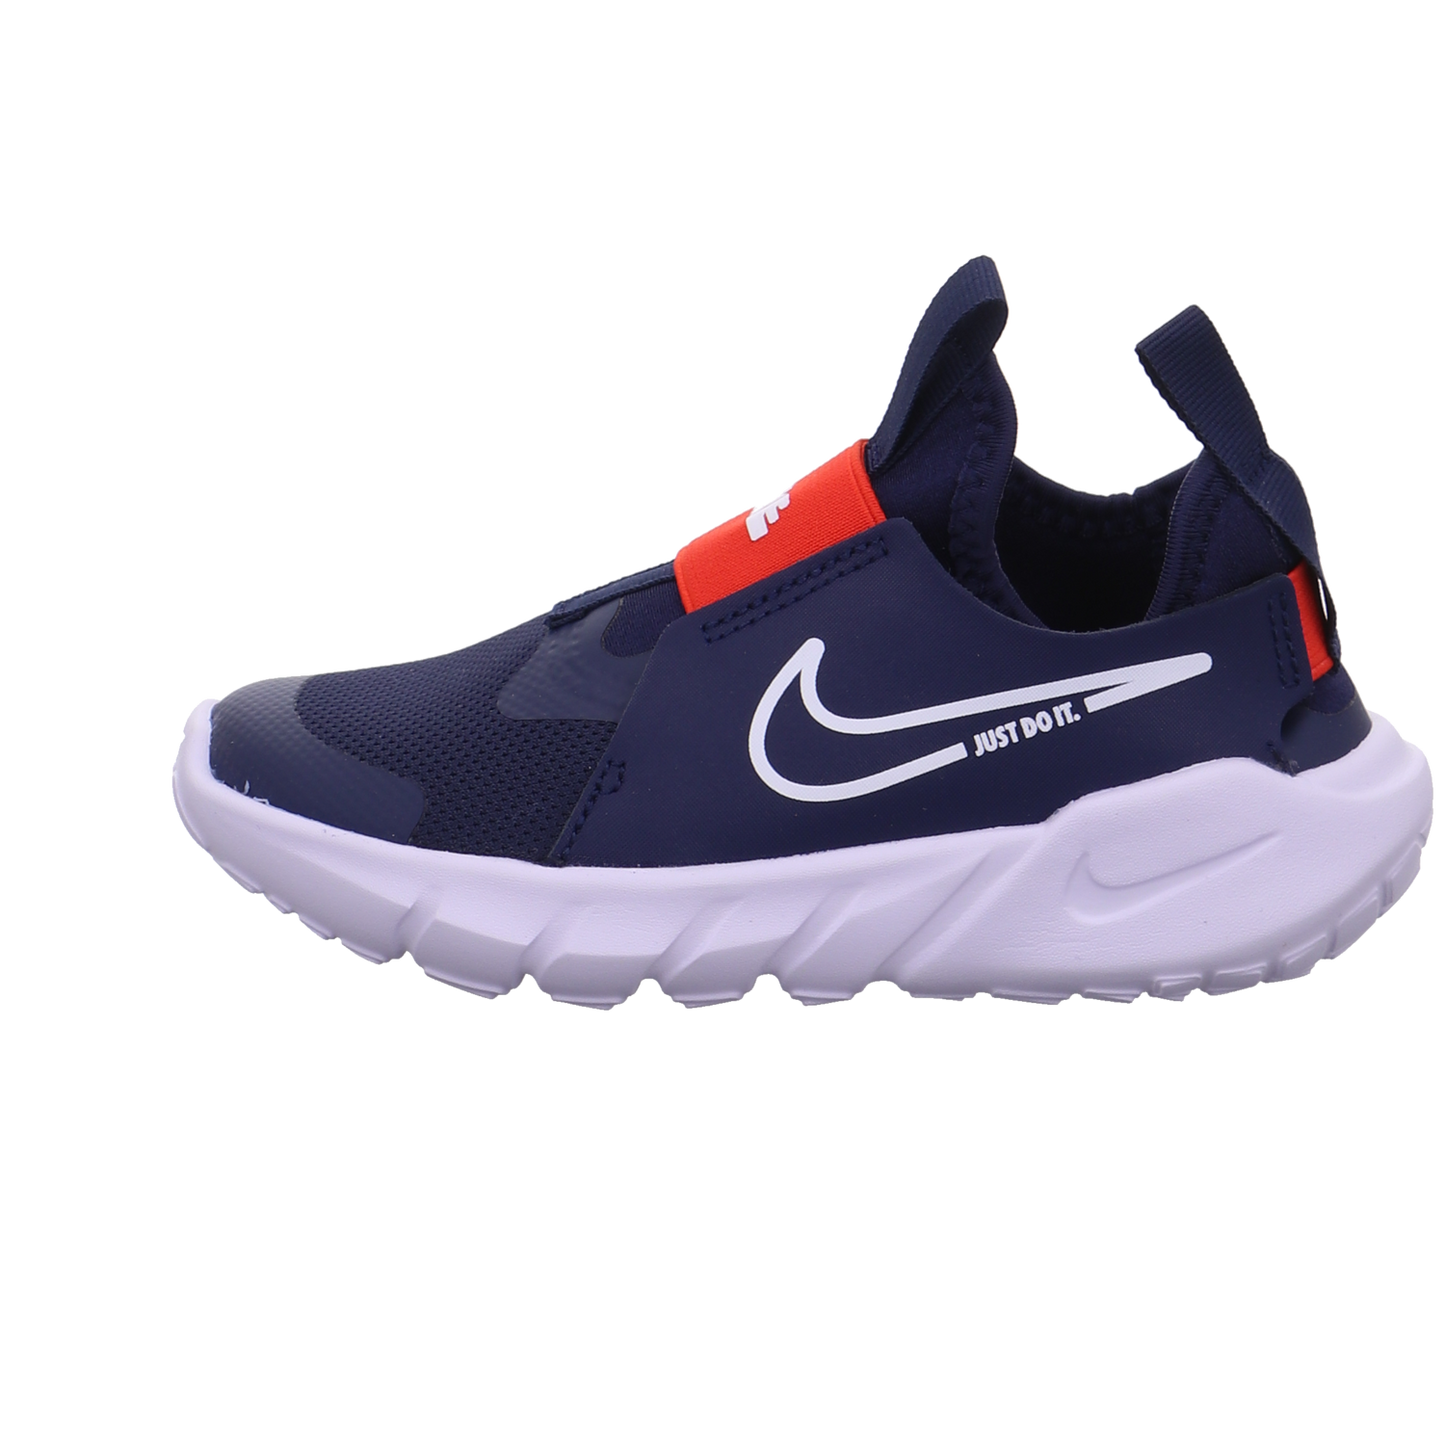 Nike Nike Flex Runner 2 Little Kids blau kombi Bild1